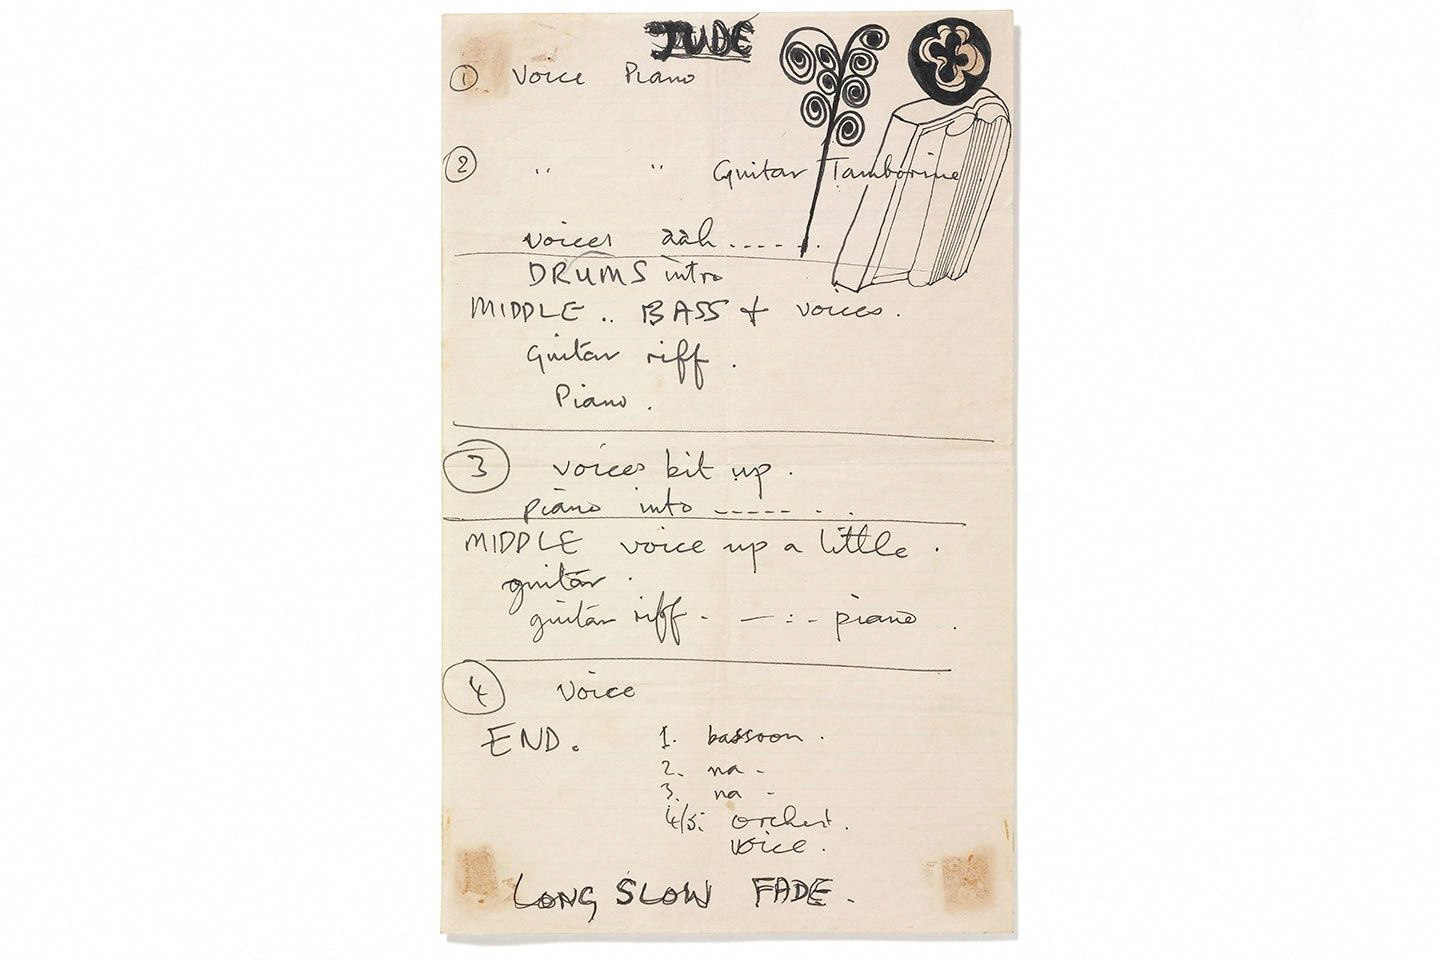 Paul McCartney's handwritten notes on the 1968 song 